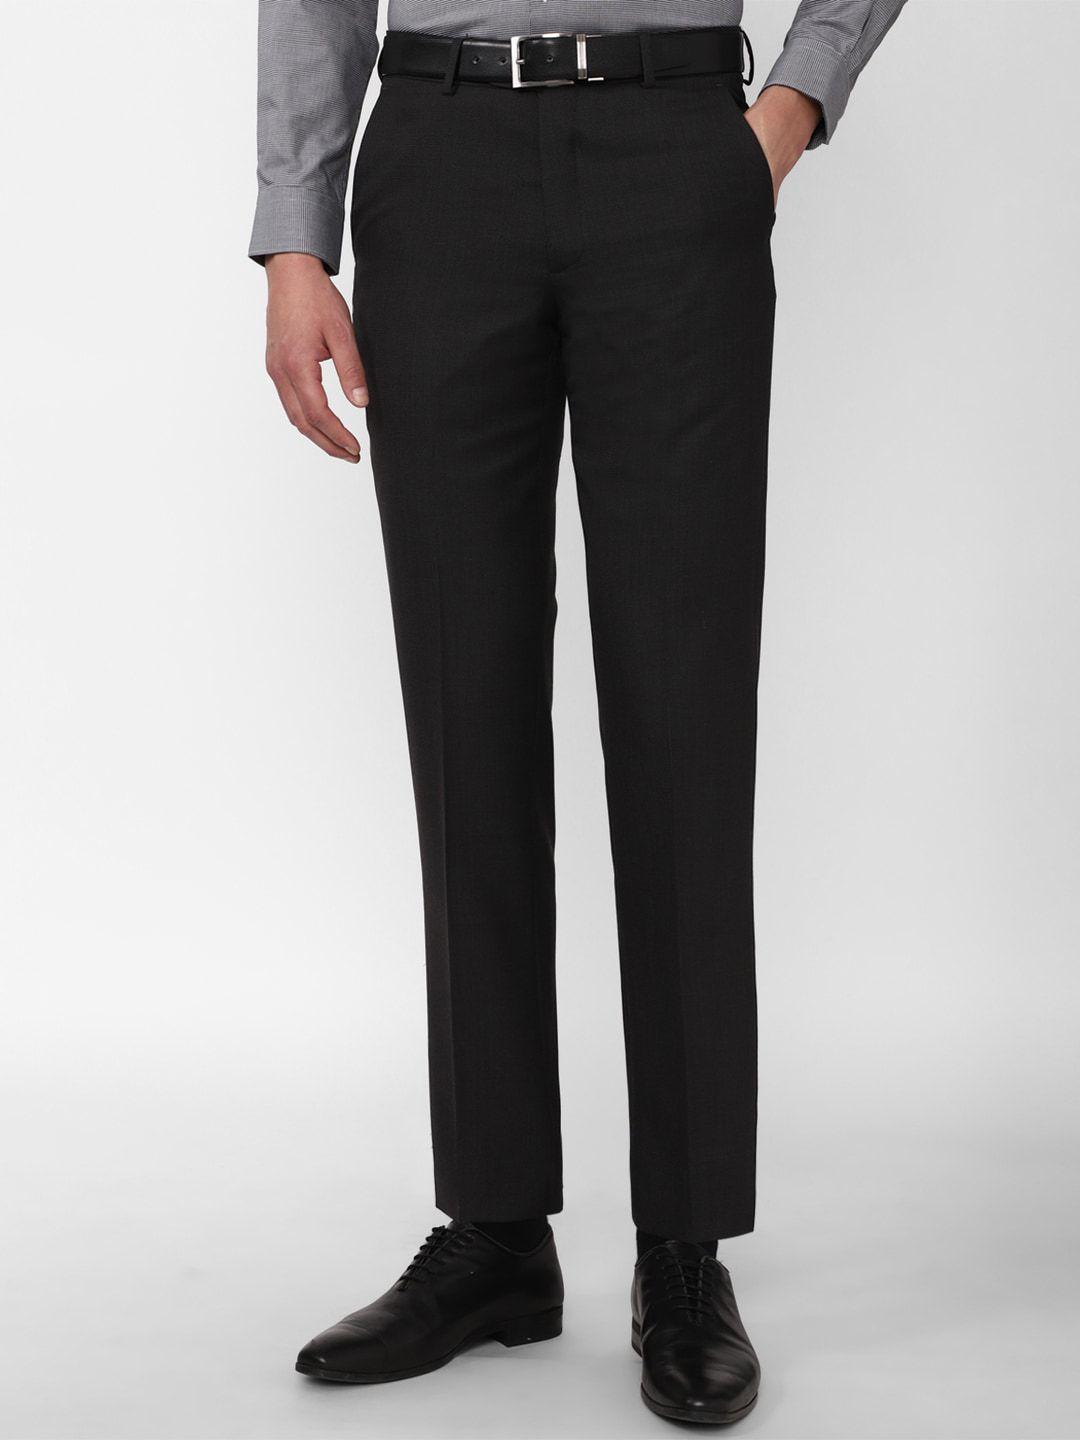 van-heusen-men-black-solid-formal-trousers